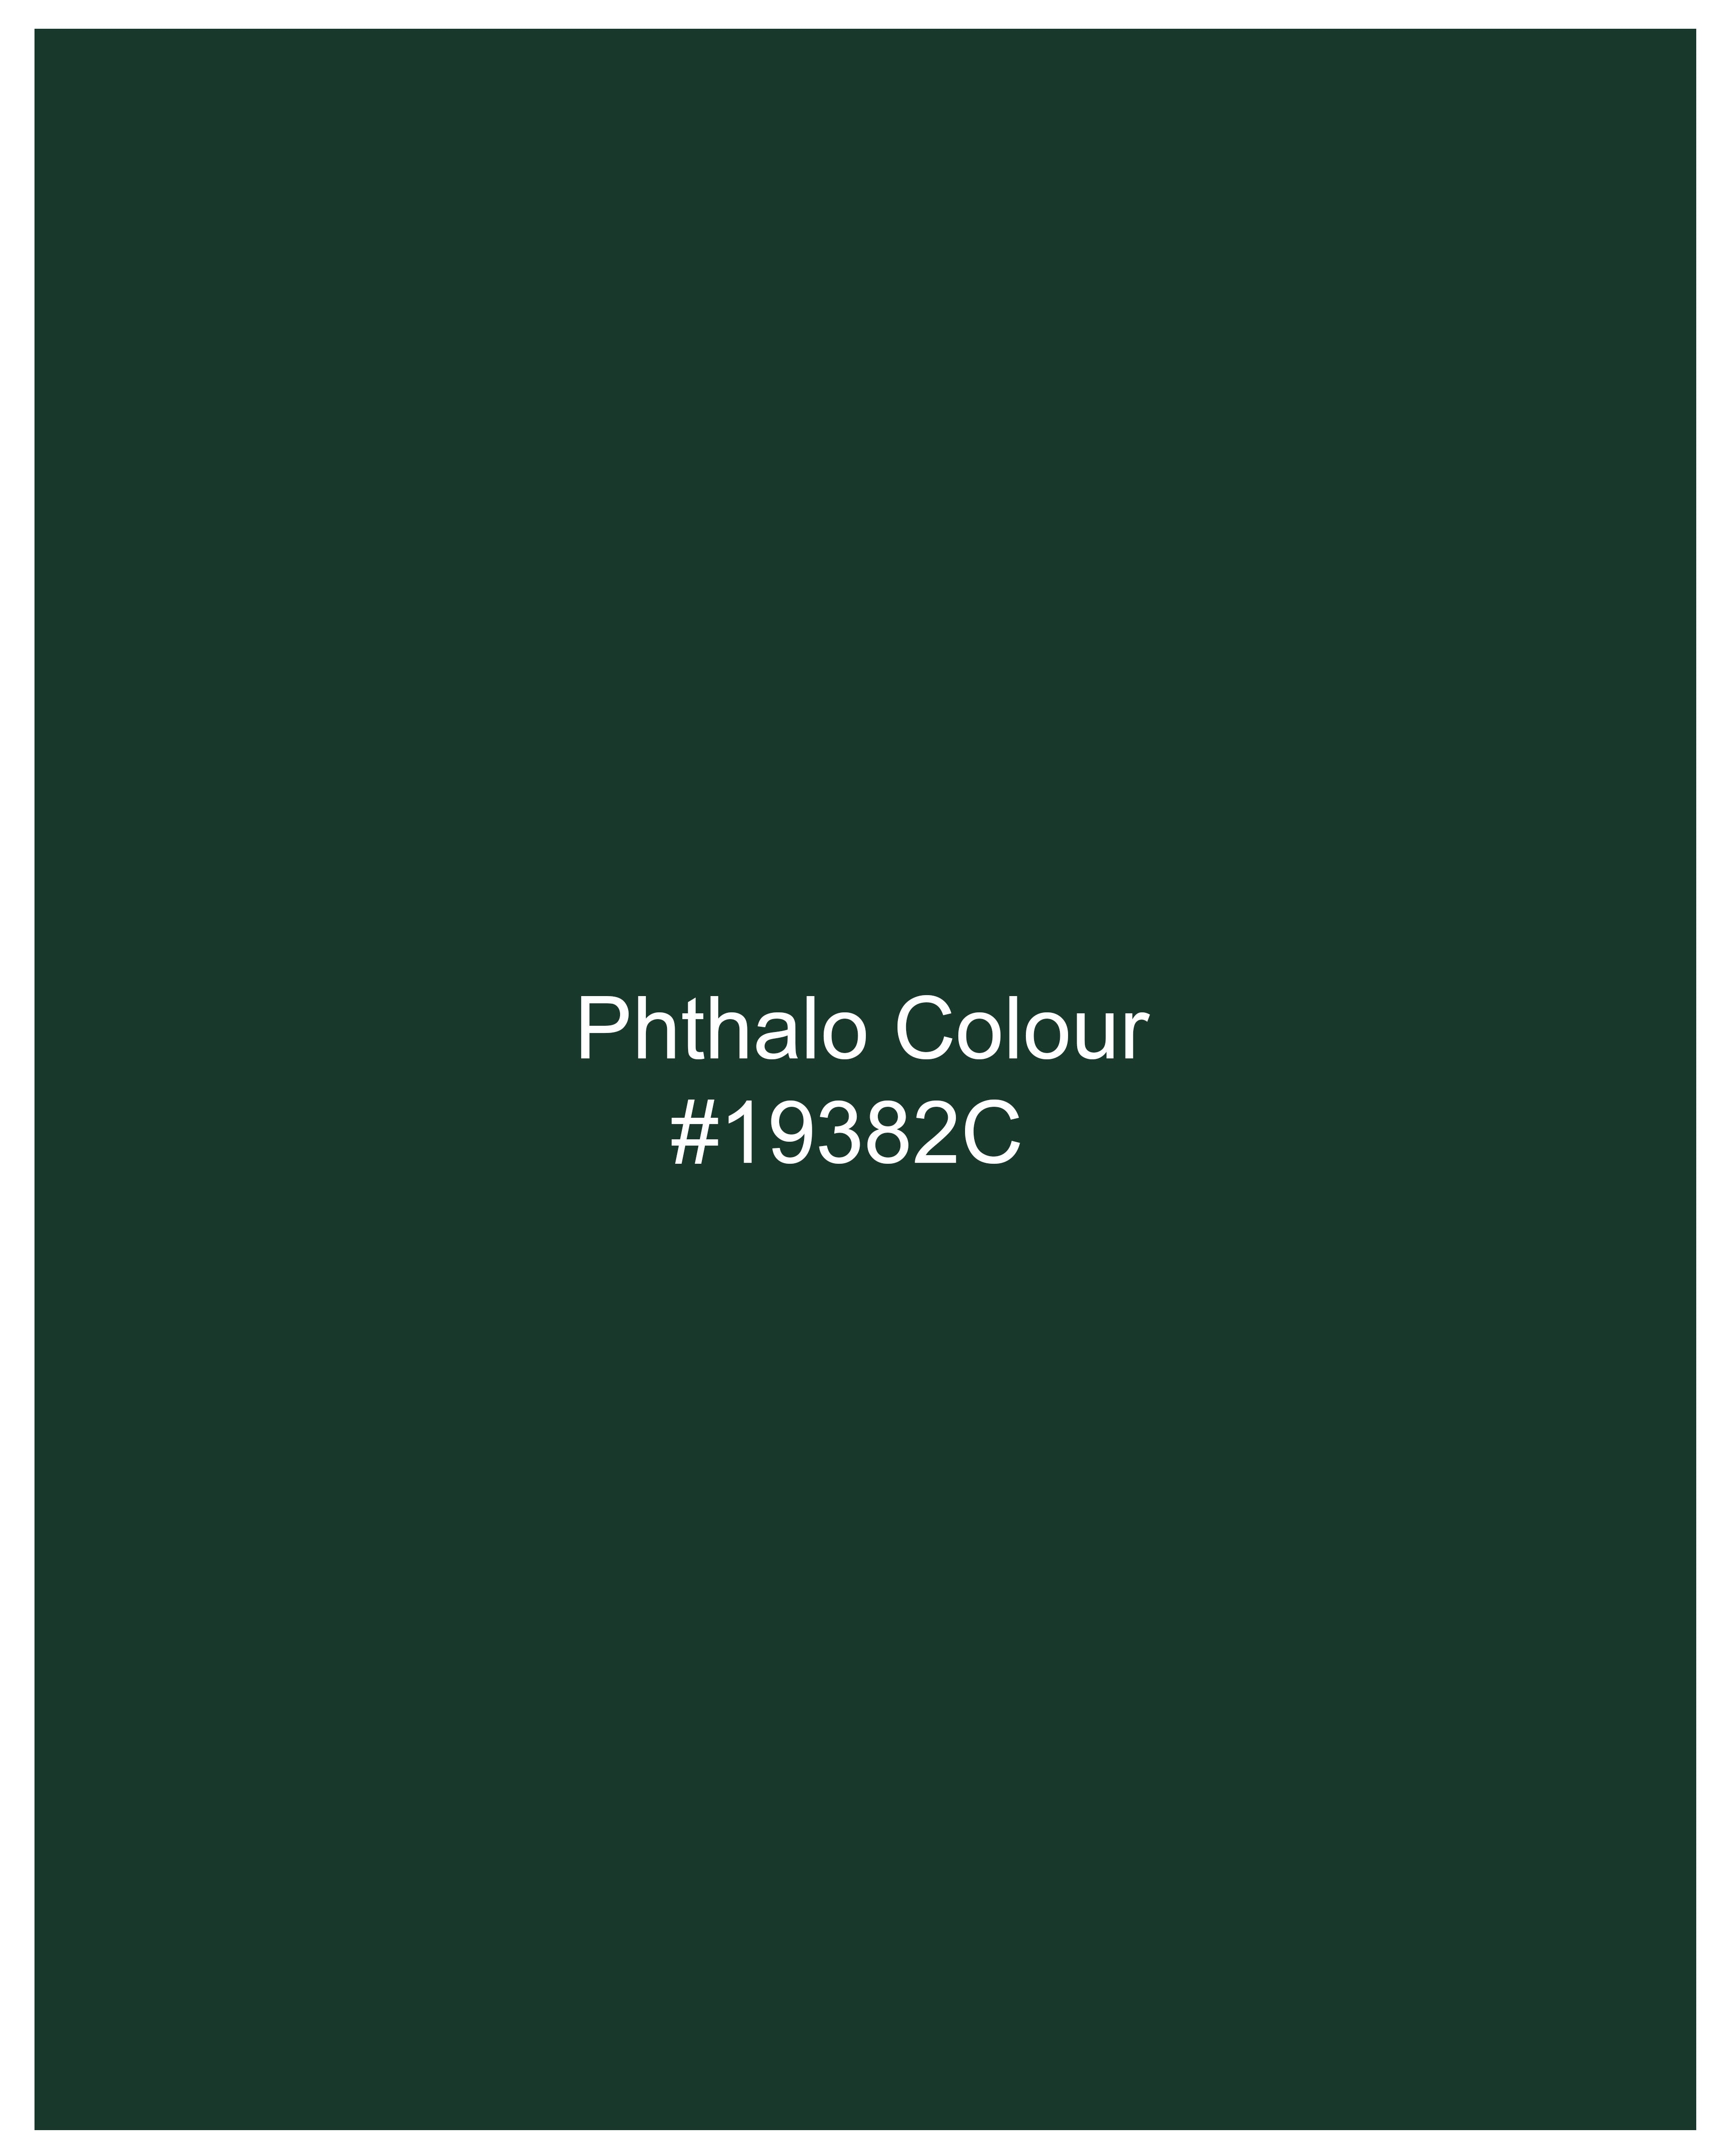 Phthalo Dark Green Snake Pleated Super Soft Premium Cotton Tuxedo Shirt 8858-BLK-TXD-38, 8858-BLK-TXD-H-38,  8858-BLK-TXD-39,  8858-BLK-TXD-H-39,  8858-BLK-TXD-40,  8858-BLK-TXD-H-40,  8858-BLK-TXD-42,  8858-BLK-TXD-H-42,  8858-BLK-TXD-44,  8858-BLK-TXD-H-44,  8858-BLK-TXD-46,  8858-BLK-TXD-H-46,  8858-BLK-TXD-48,  8858-BLK-TXD-H-48,  8858-BLK-TXD-50,  8858-BLK-TXD-H-50,  8858-BLK-TXD-52,  8858-BLK-TXD-H-52